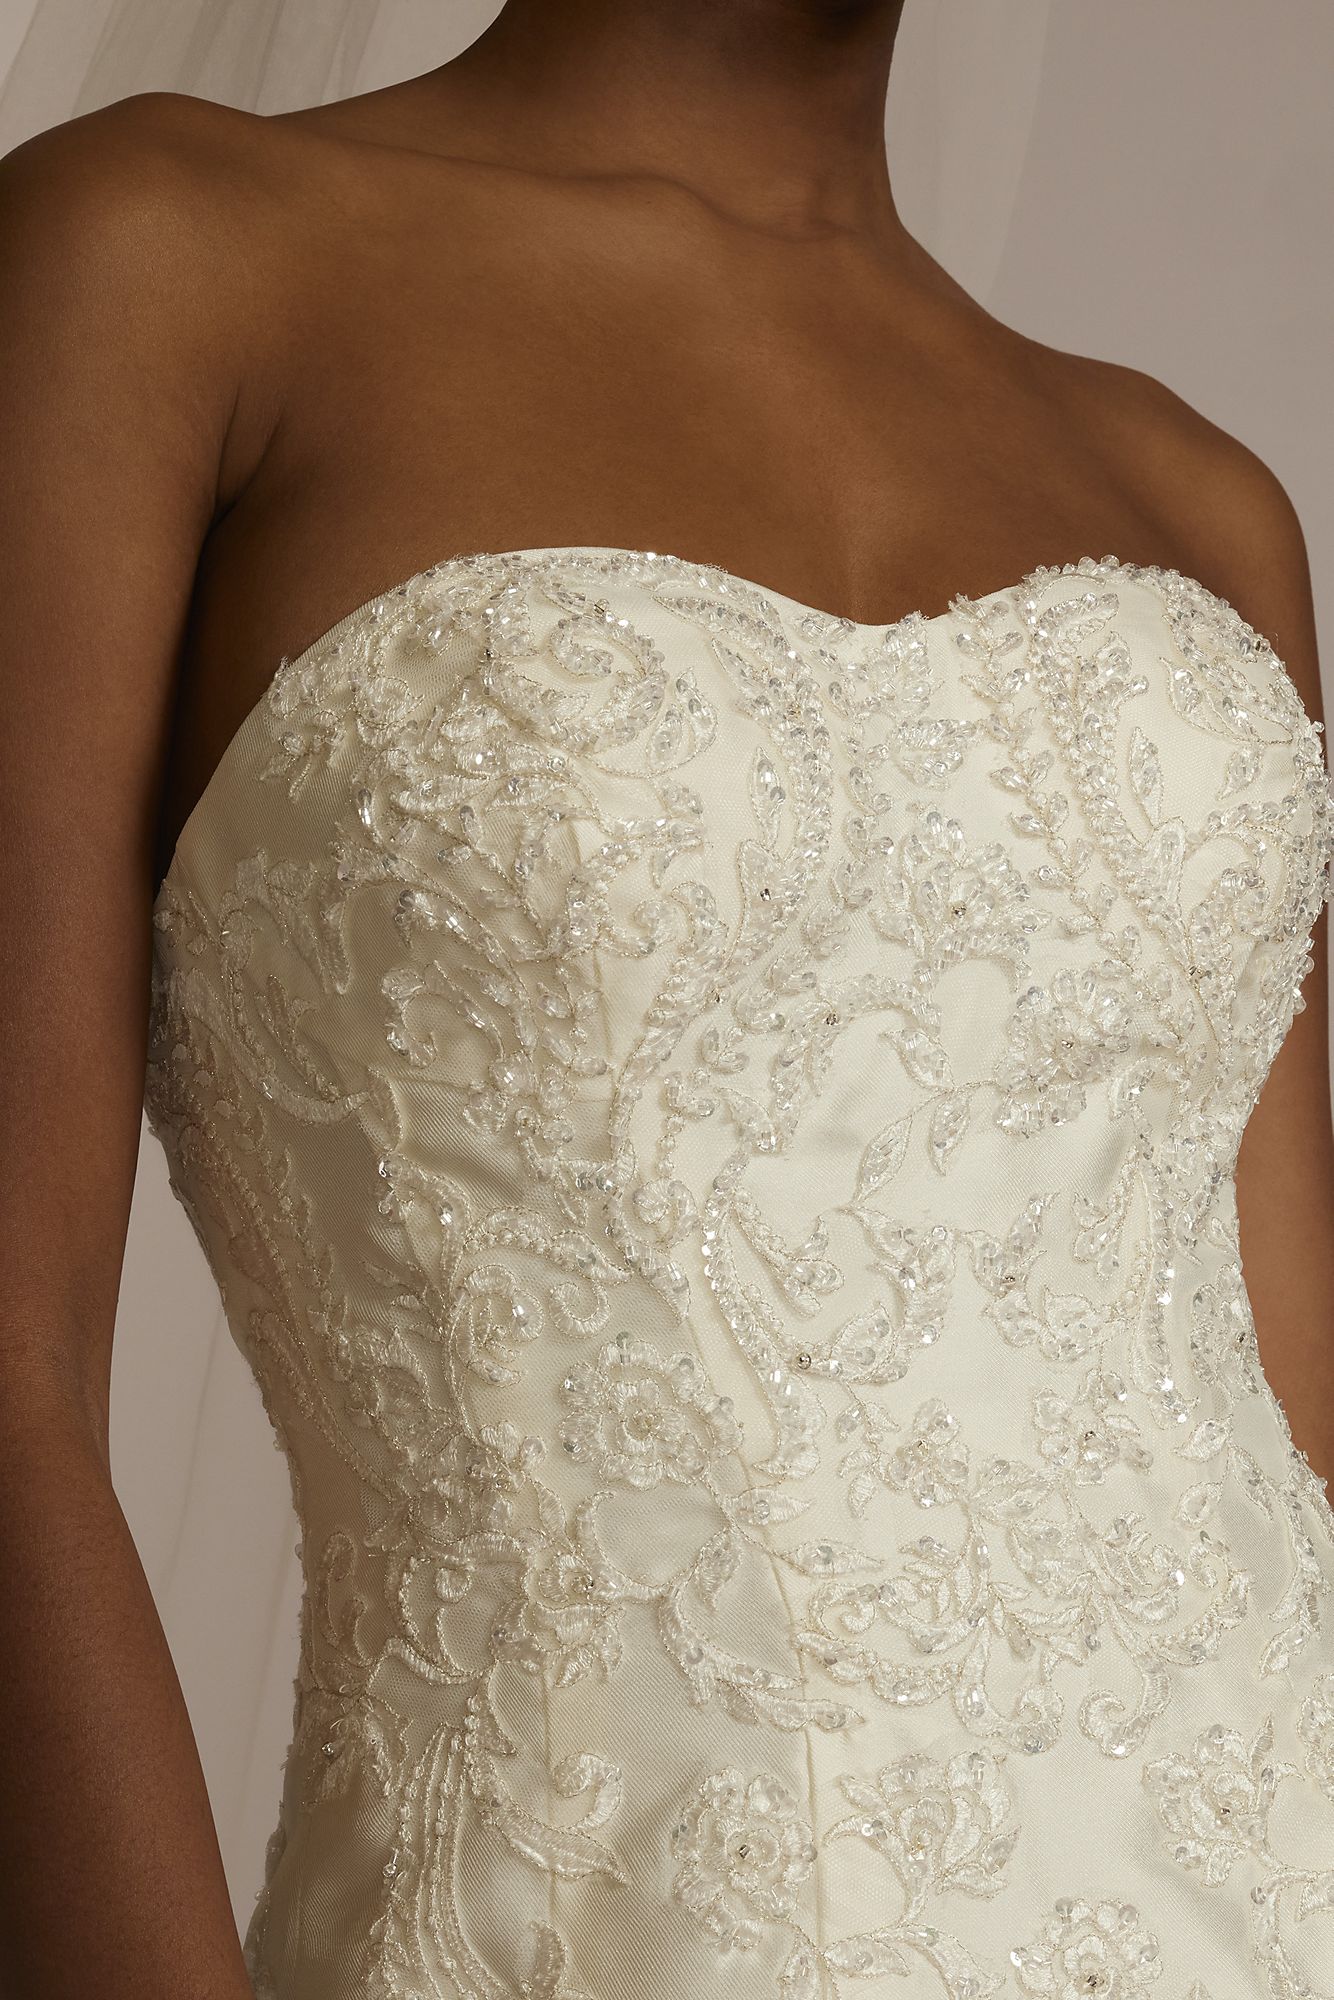 Strapless Drop Waist Lace Petite Wedding Dress Oleg Cassini 7CWG934